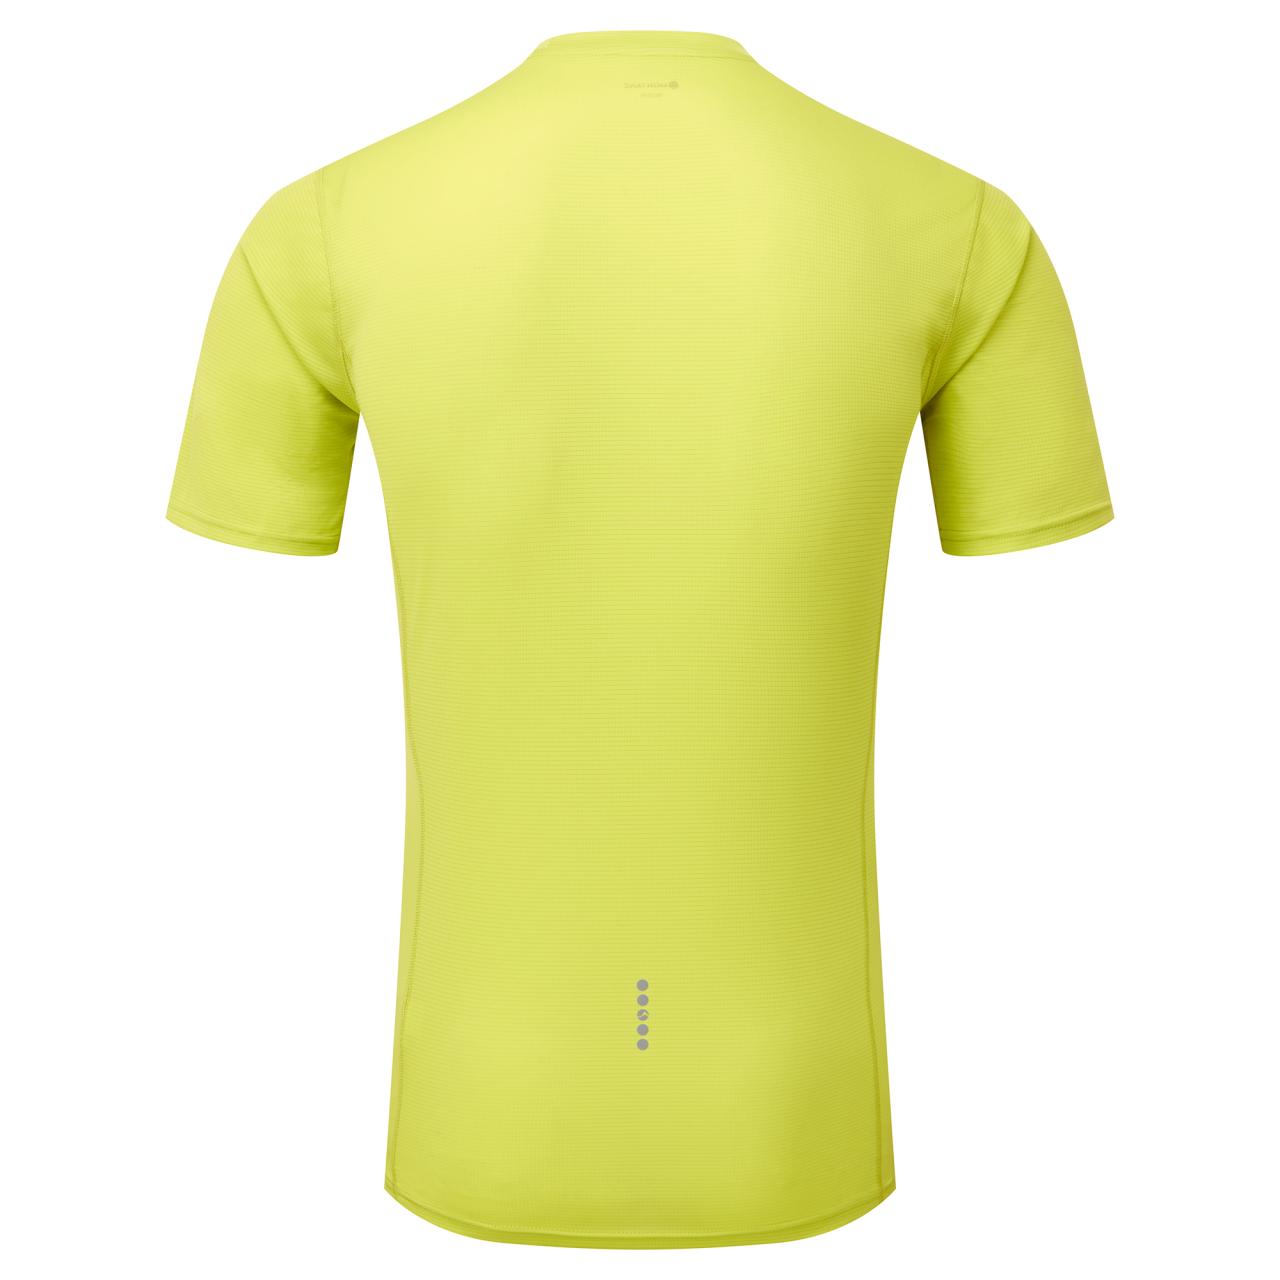 DART NANO T-SHIRT-CITRUS SPRING-XXL pánské triko žlutozelené